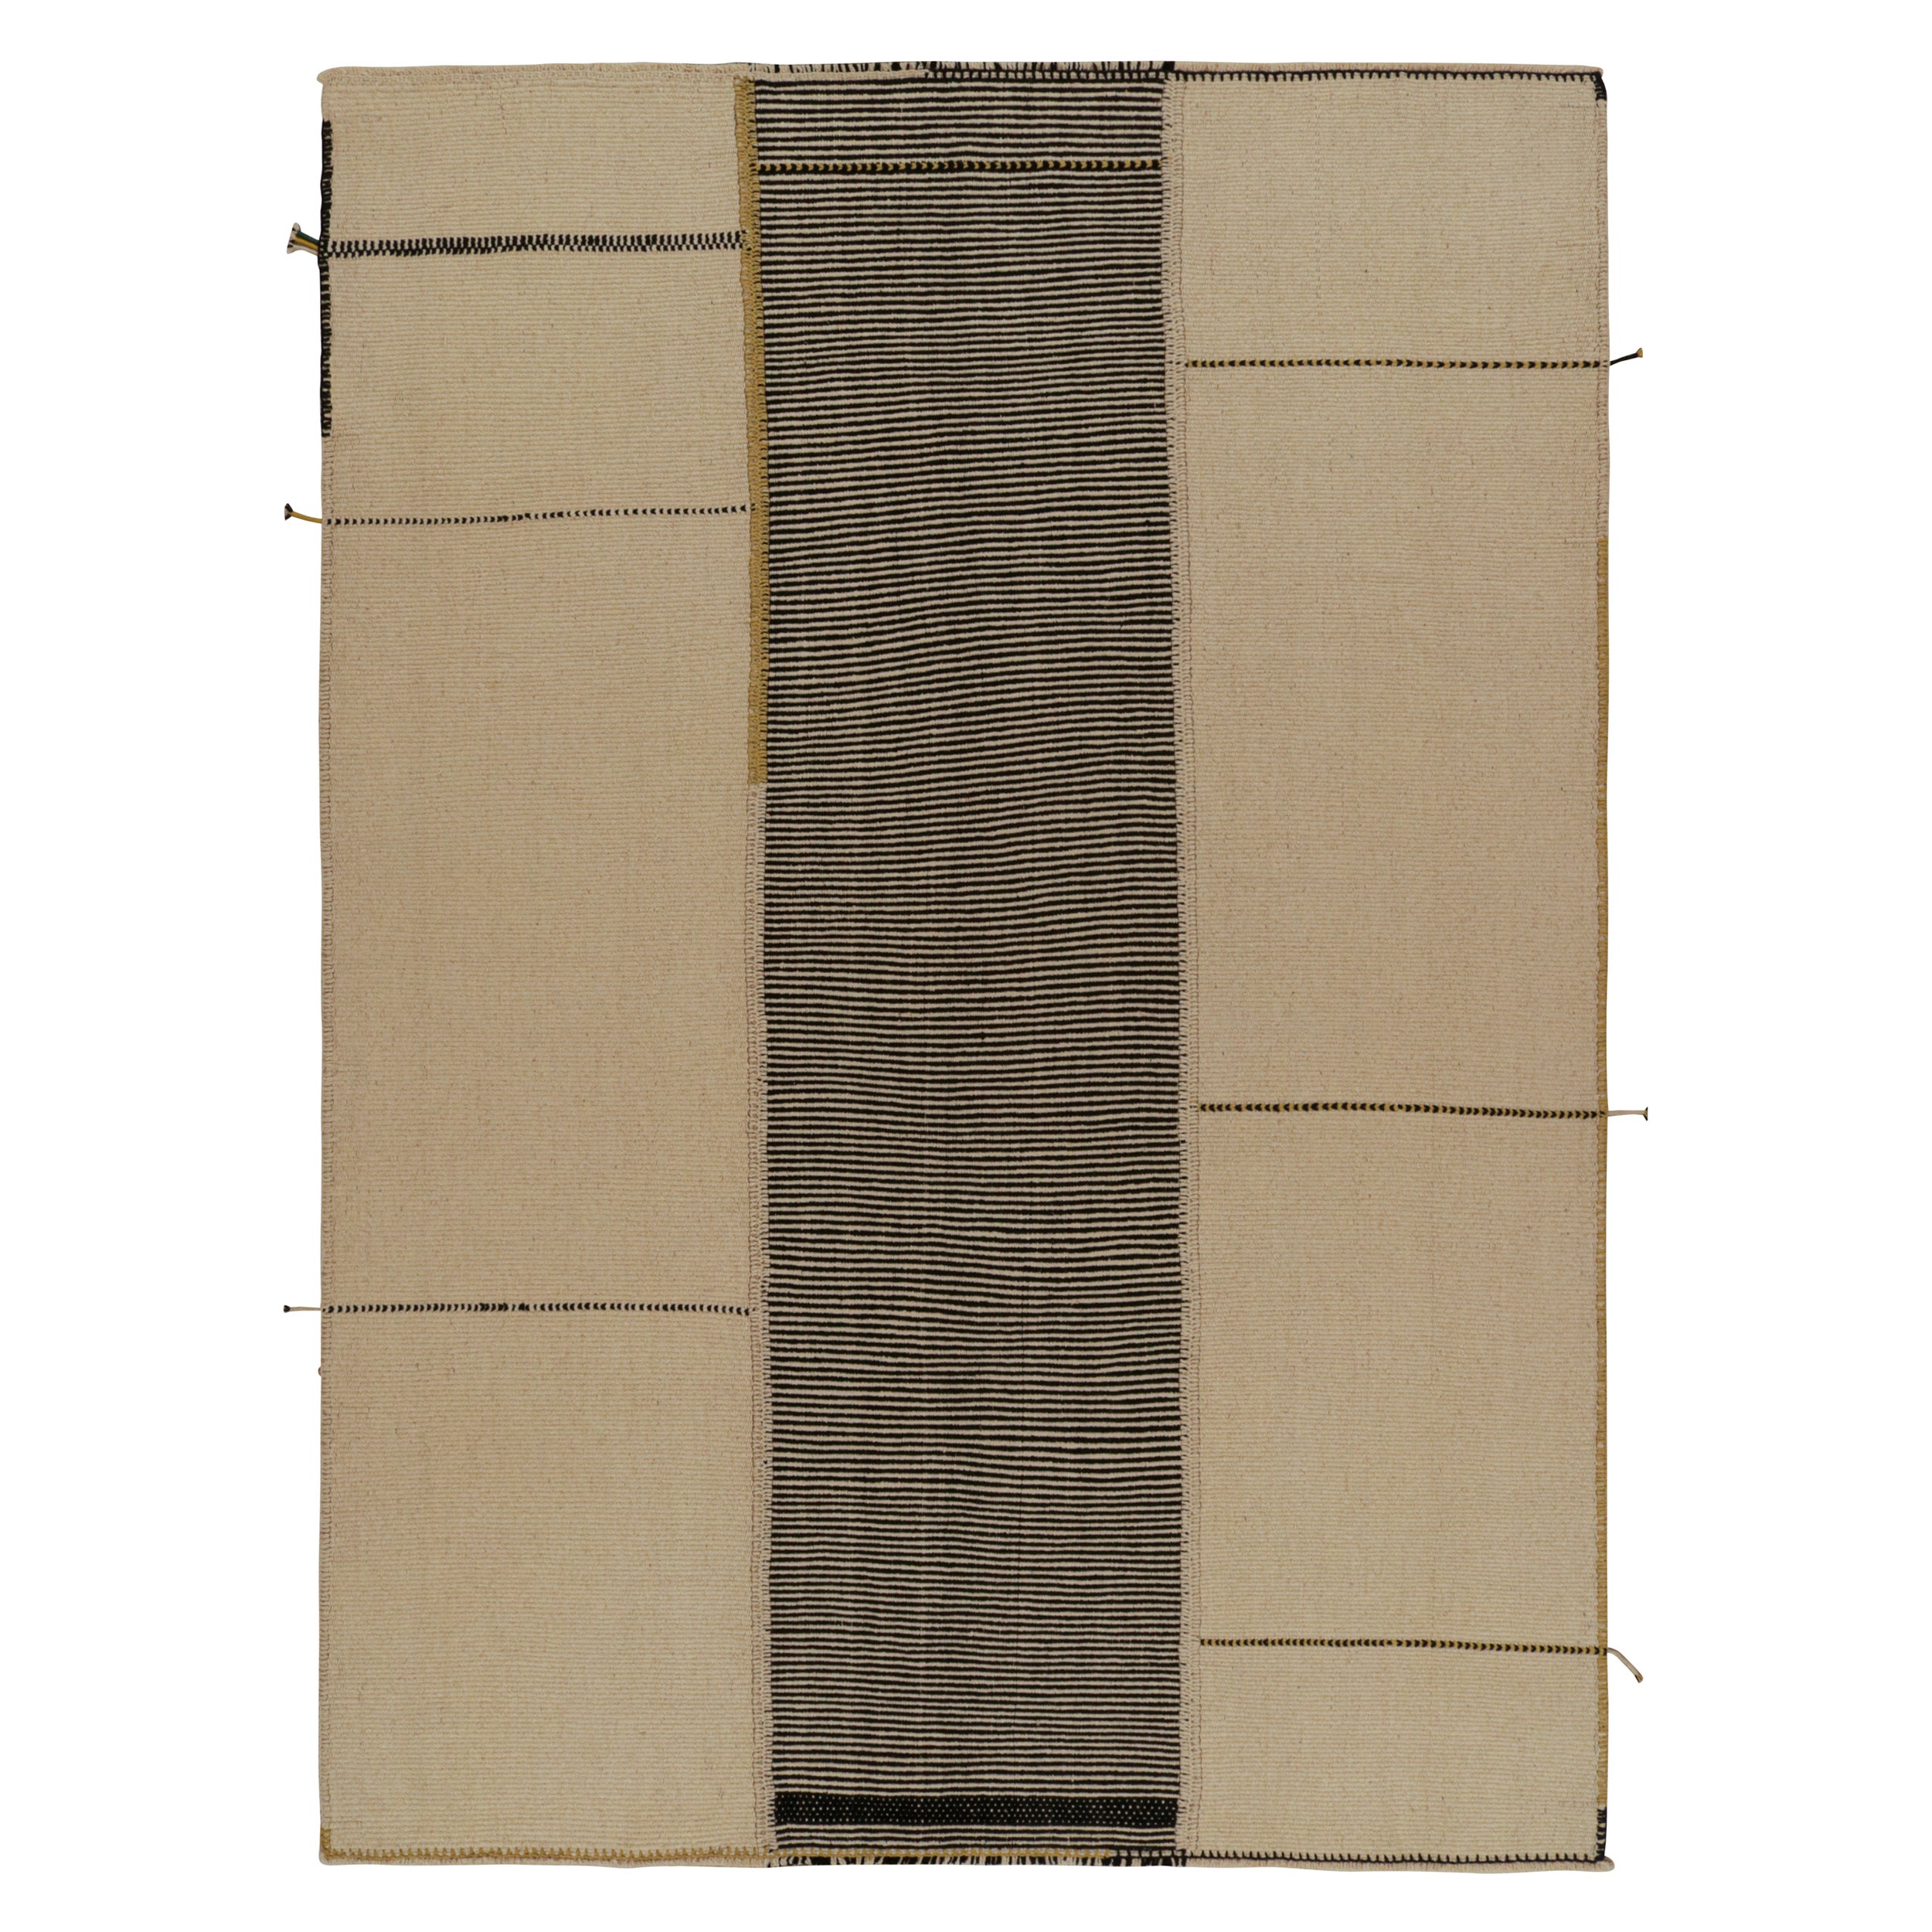 Rug & Kilim’s Modern Kilim Rug in Beige, Black & Gold Textural Stripes 